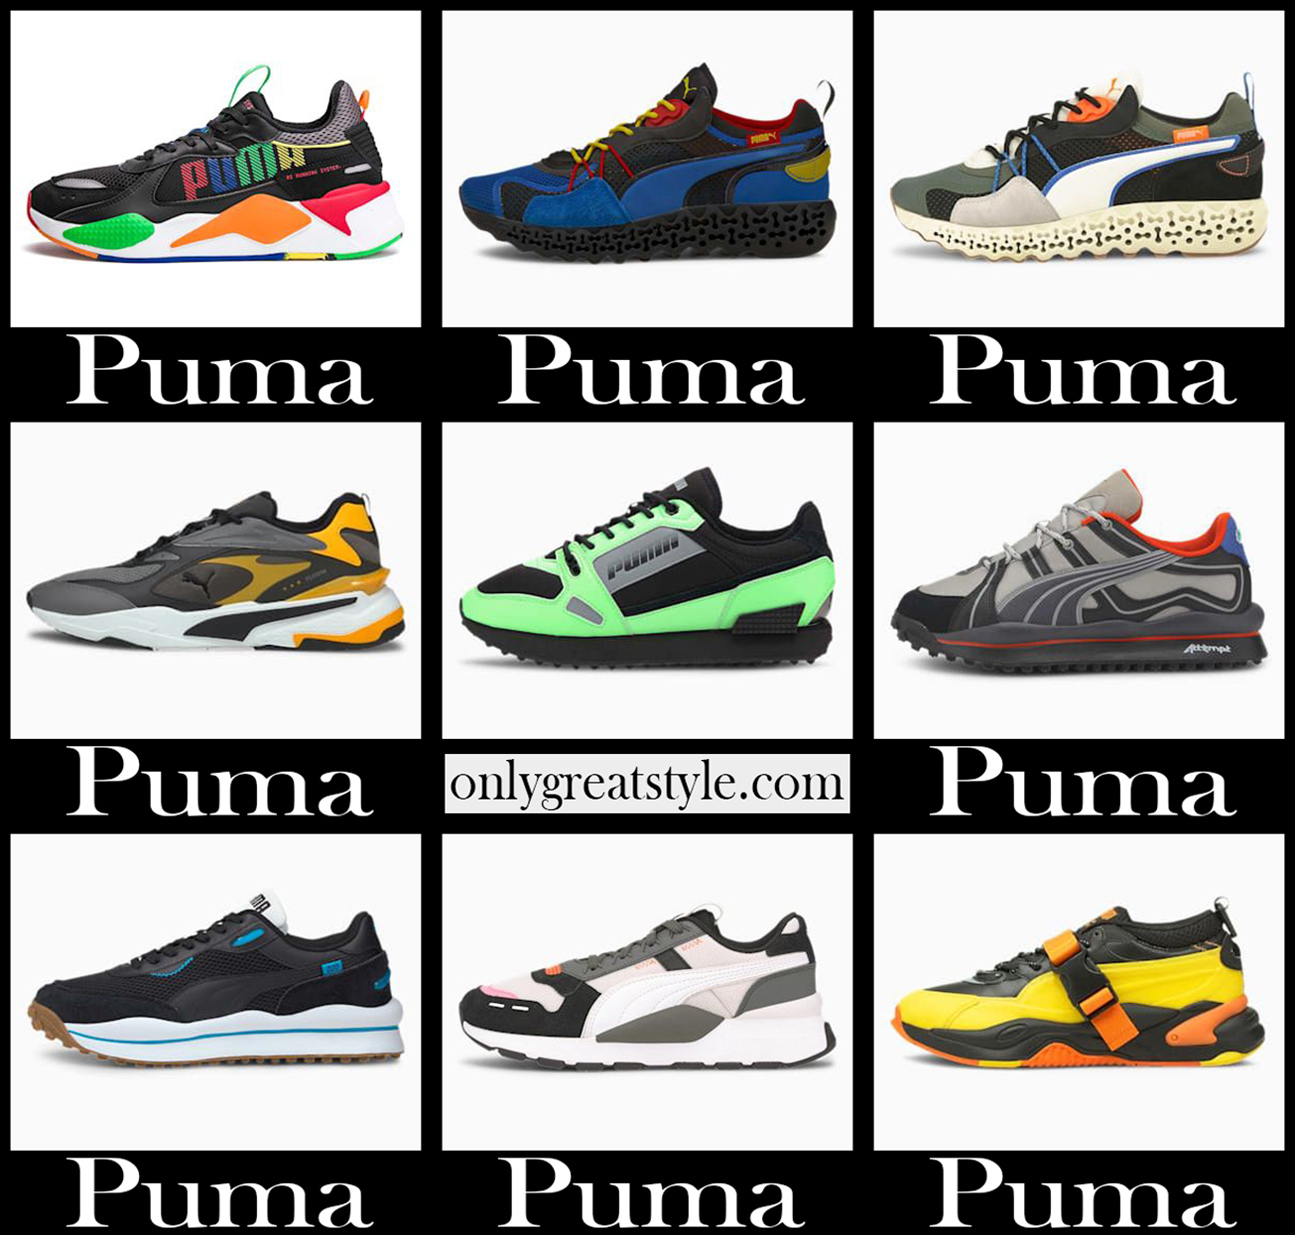 puma shoes new arrival